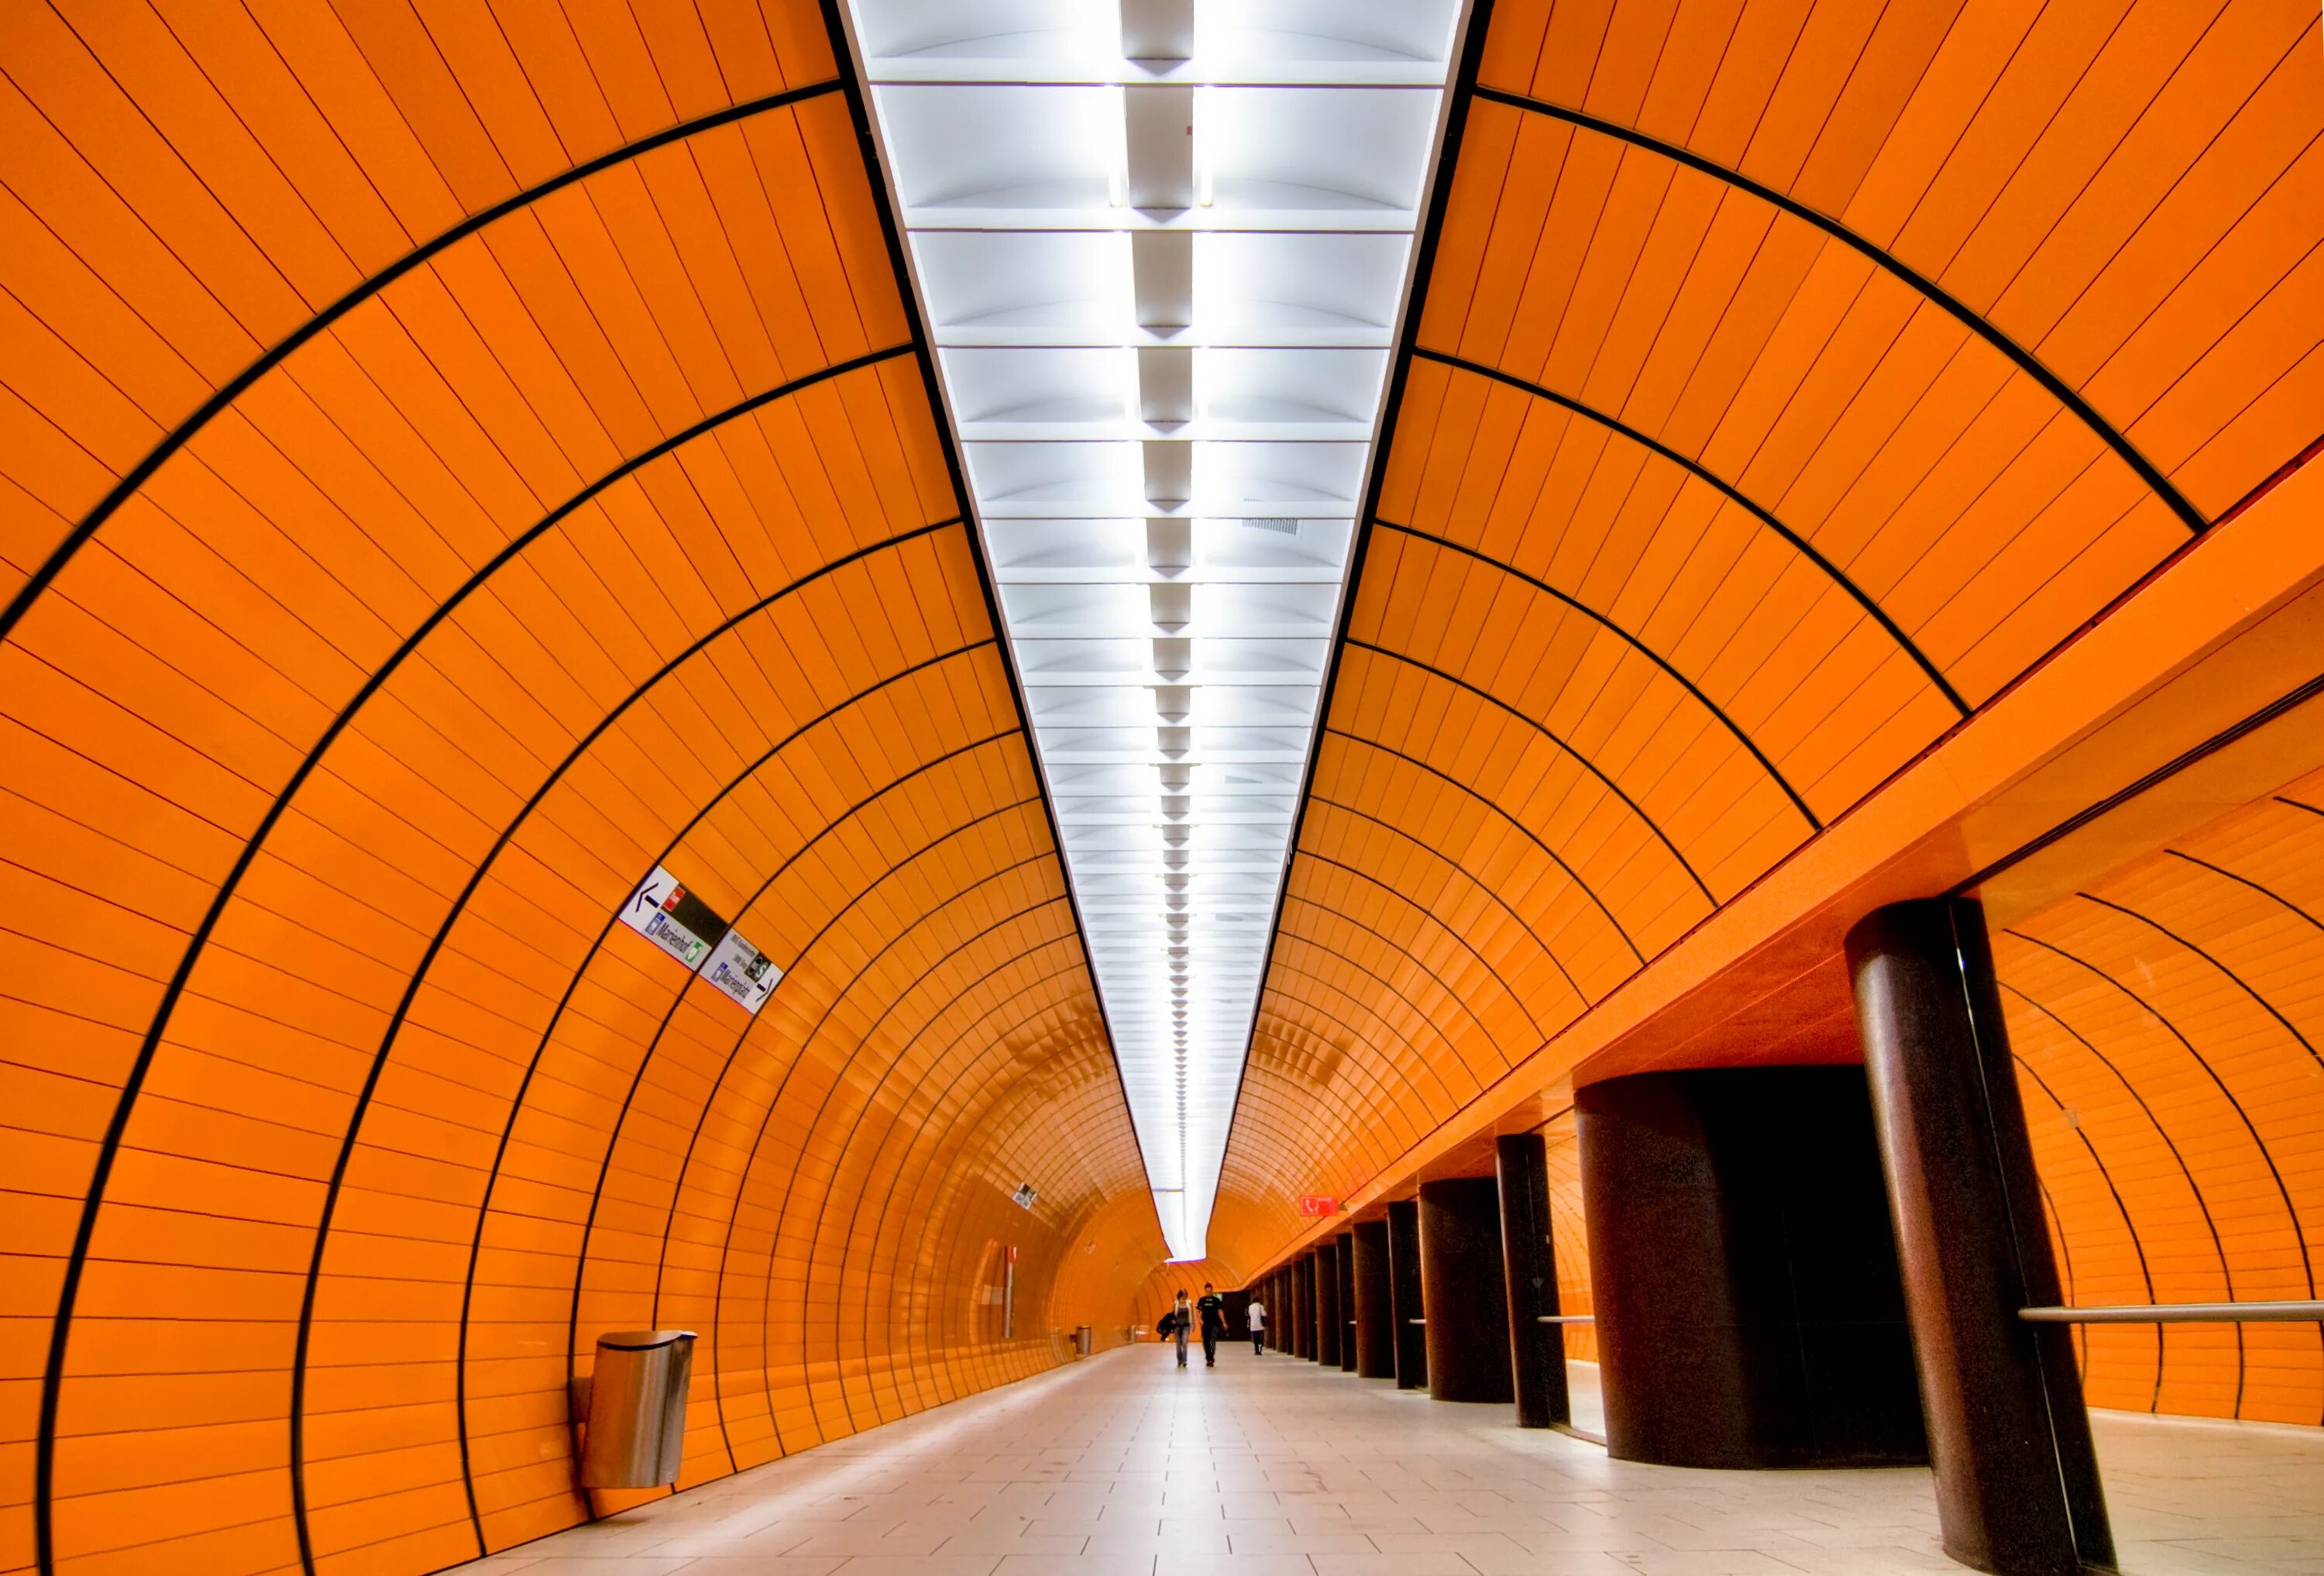 Включи оранжевую станцию. Мариенплац Мюнхен метро. Мюнхен: станция Candidplatz. Станция метро Мариенплац Мюнхен Германия. Мариенплац станция метро.